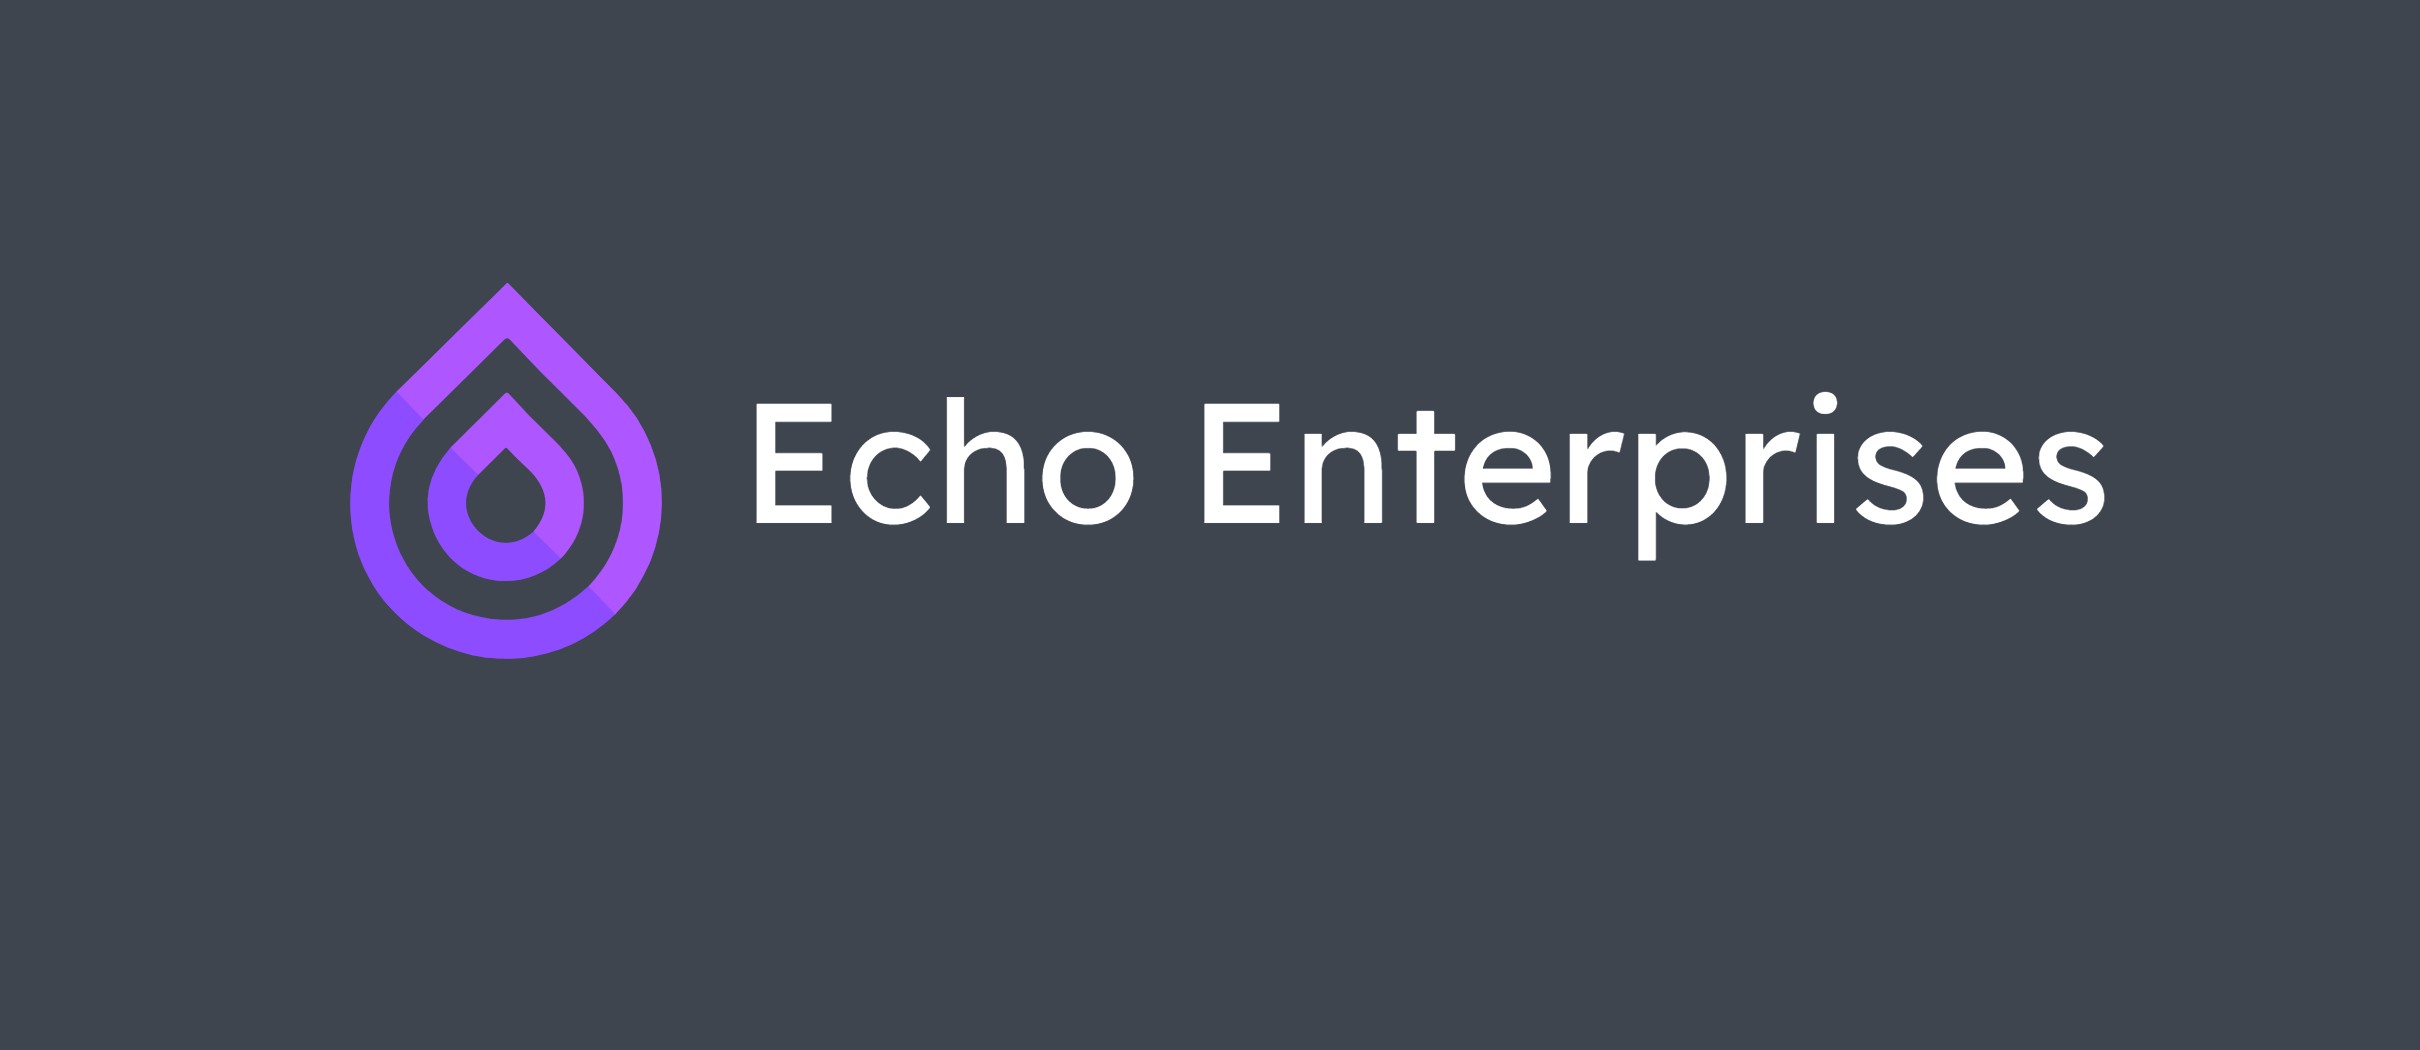 Echo Enterprises